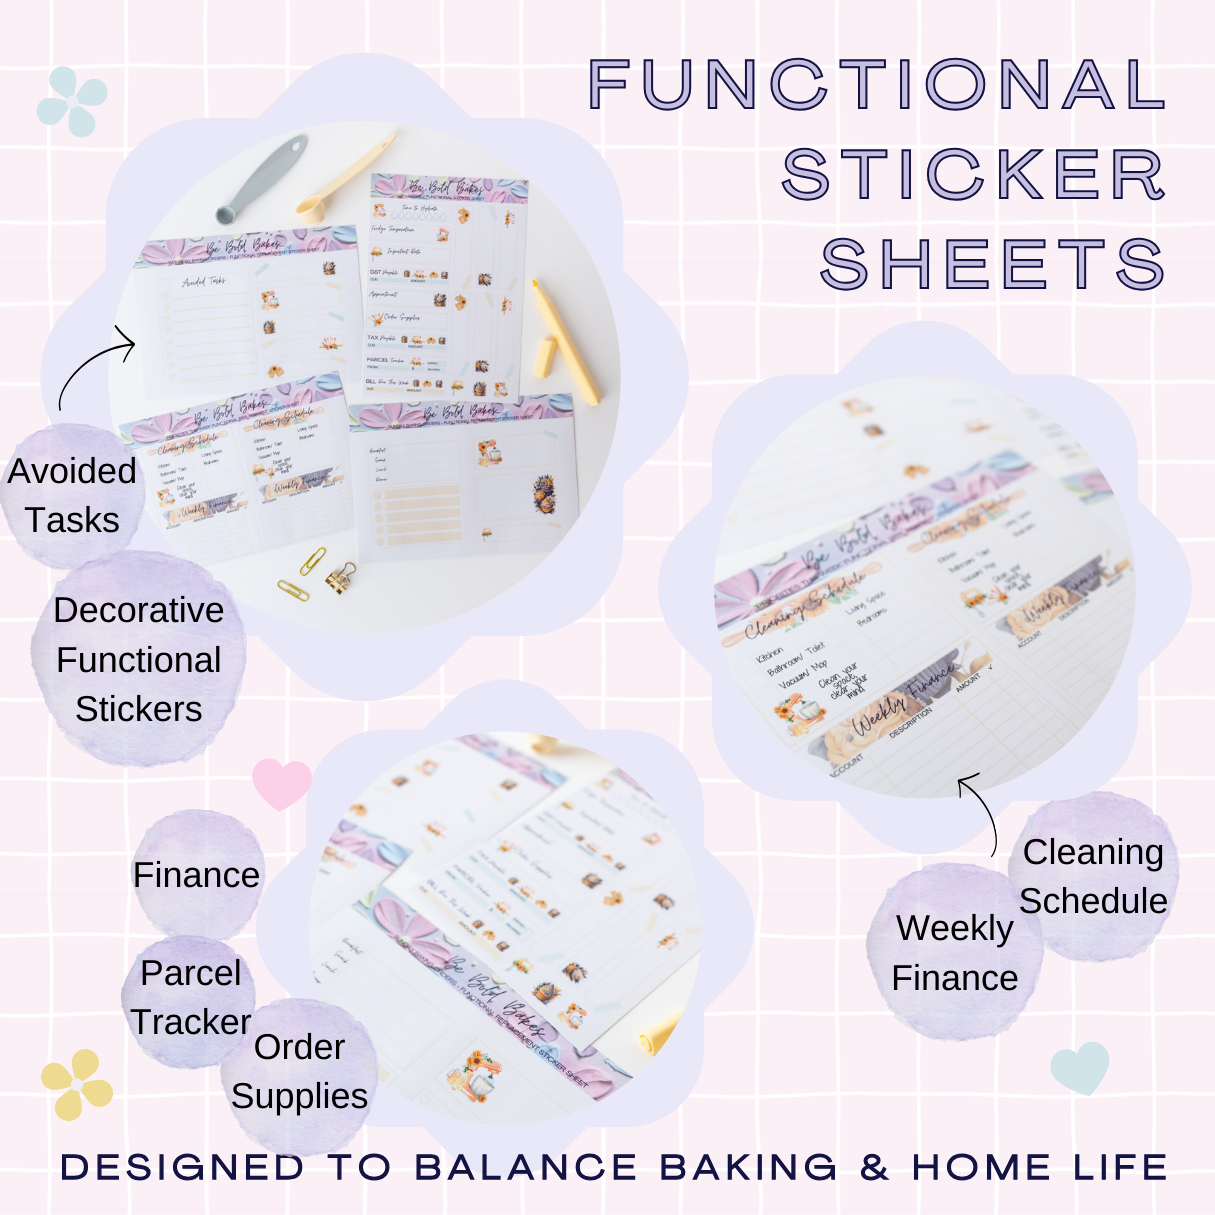 Sunflower Bakers - Weekly Functional Sticker Sheet Set